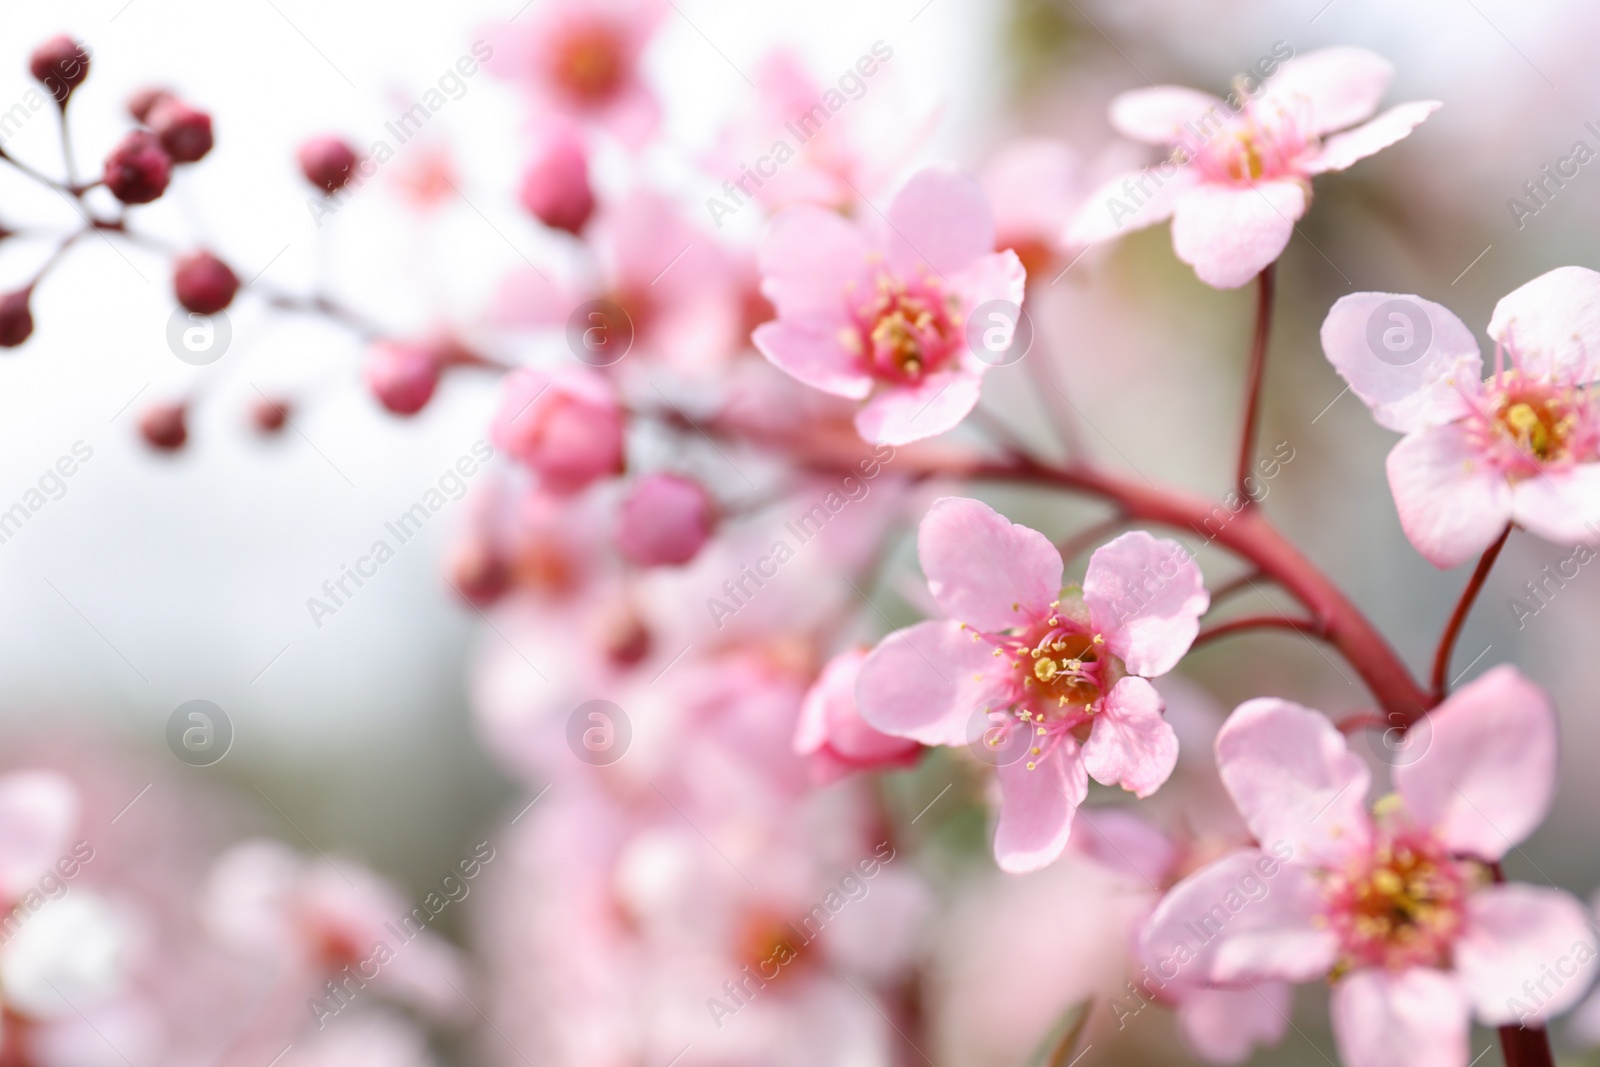 Photo of Closeup view of blossoming pink sakura tree outdoors